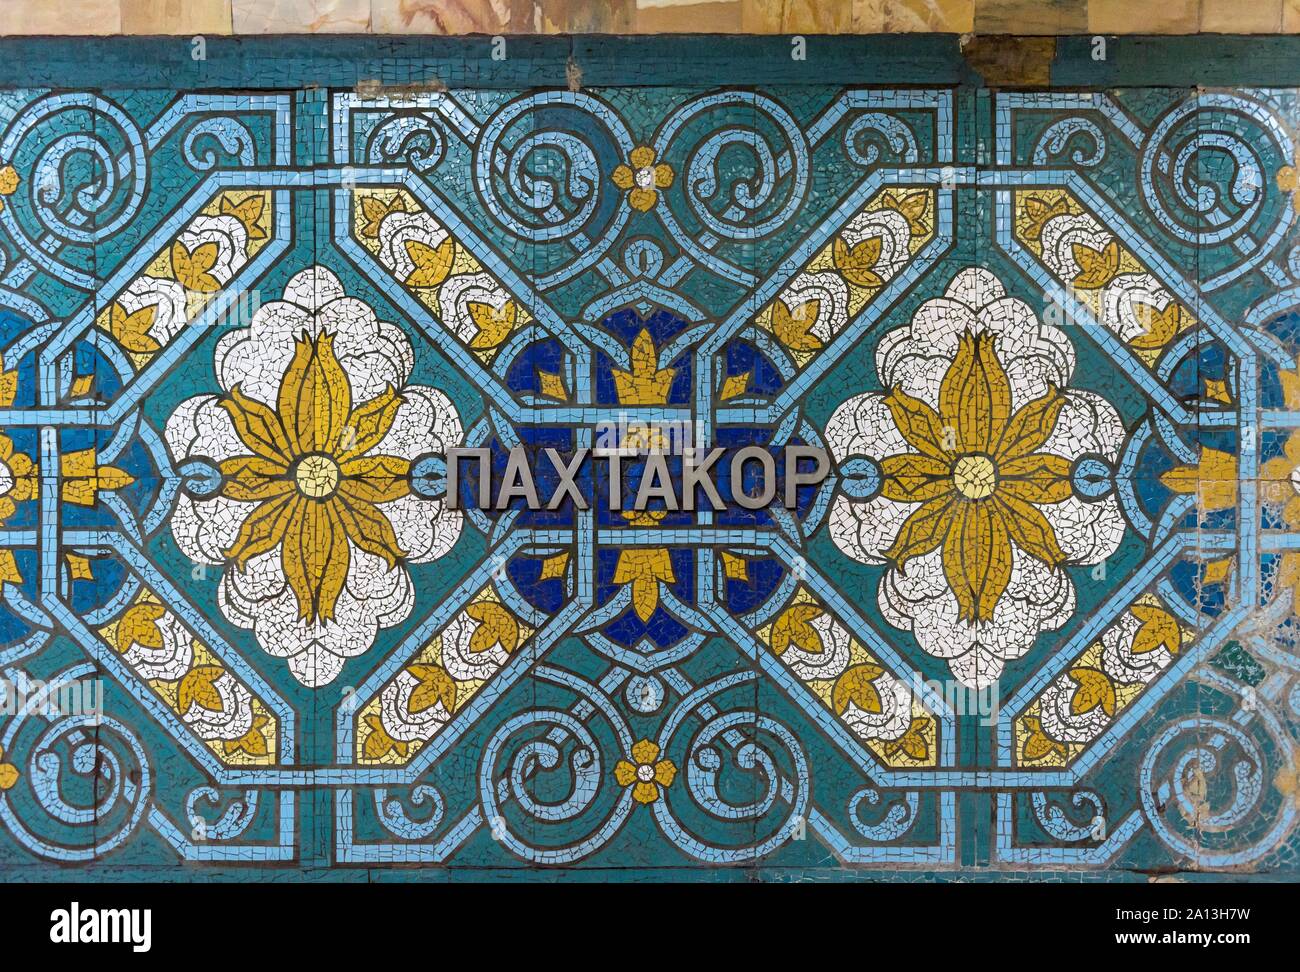 Wall decoration of Pakhtakor Metro station, Tashkent, Uzbekistan Stock Photo